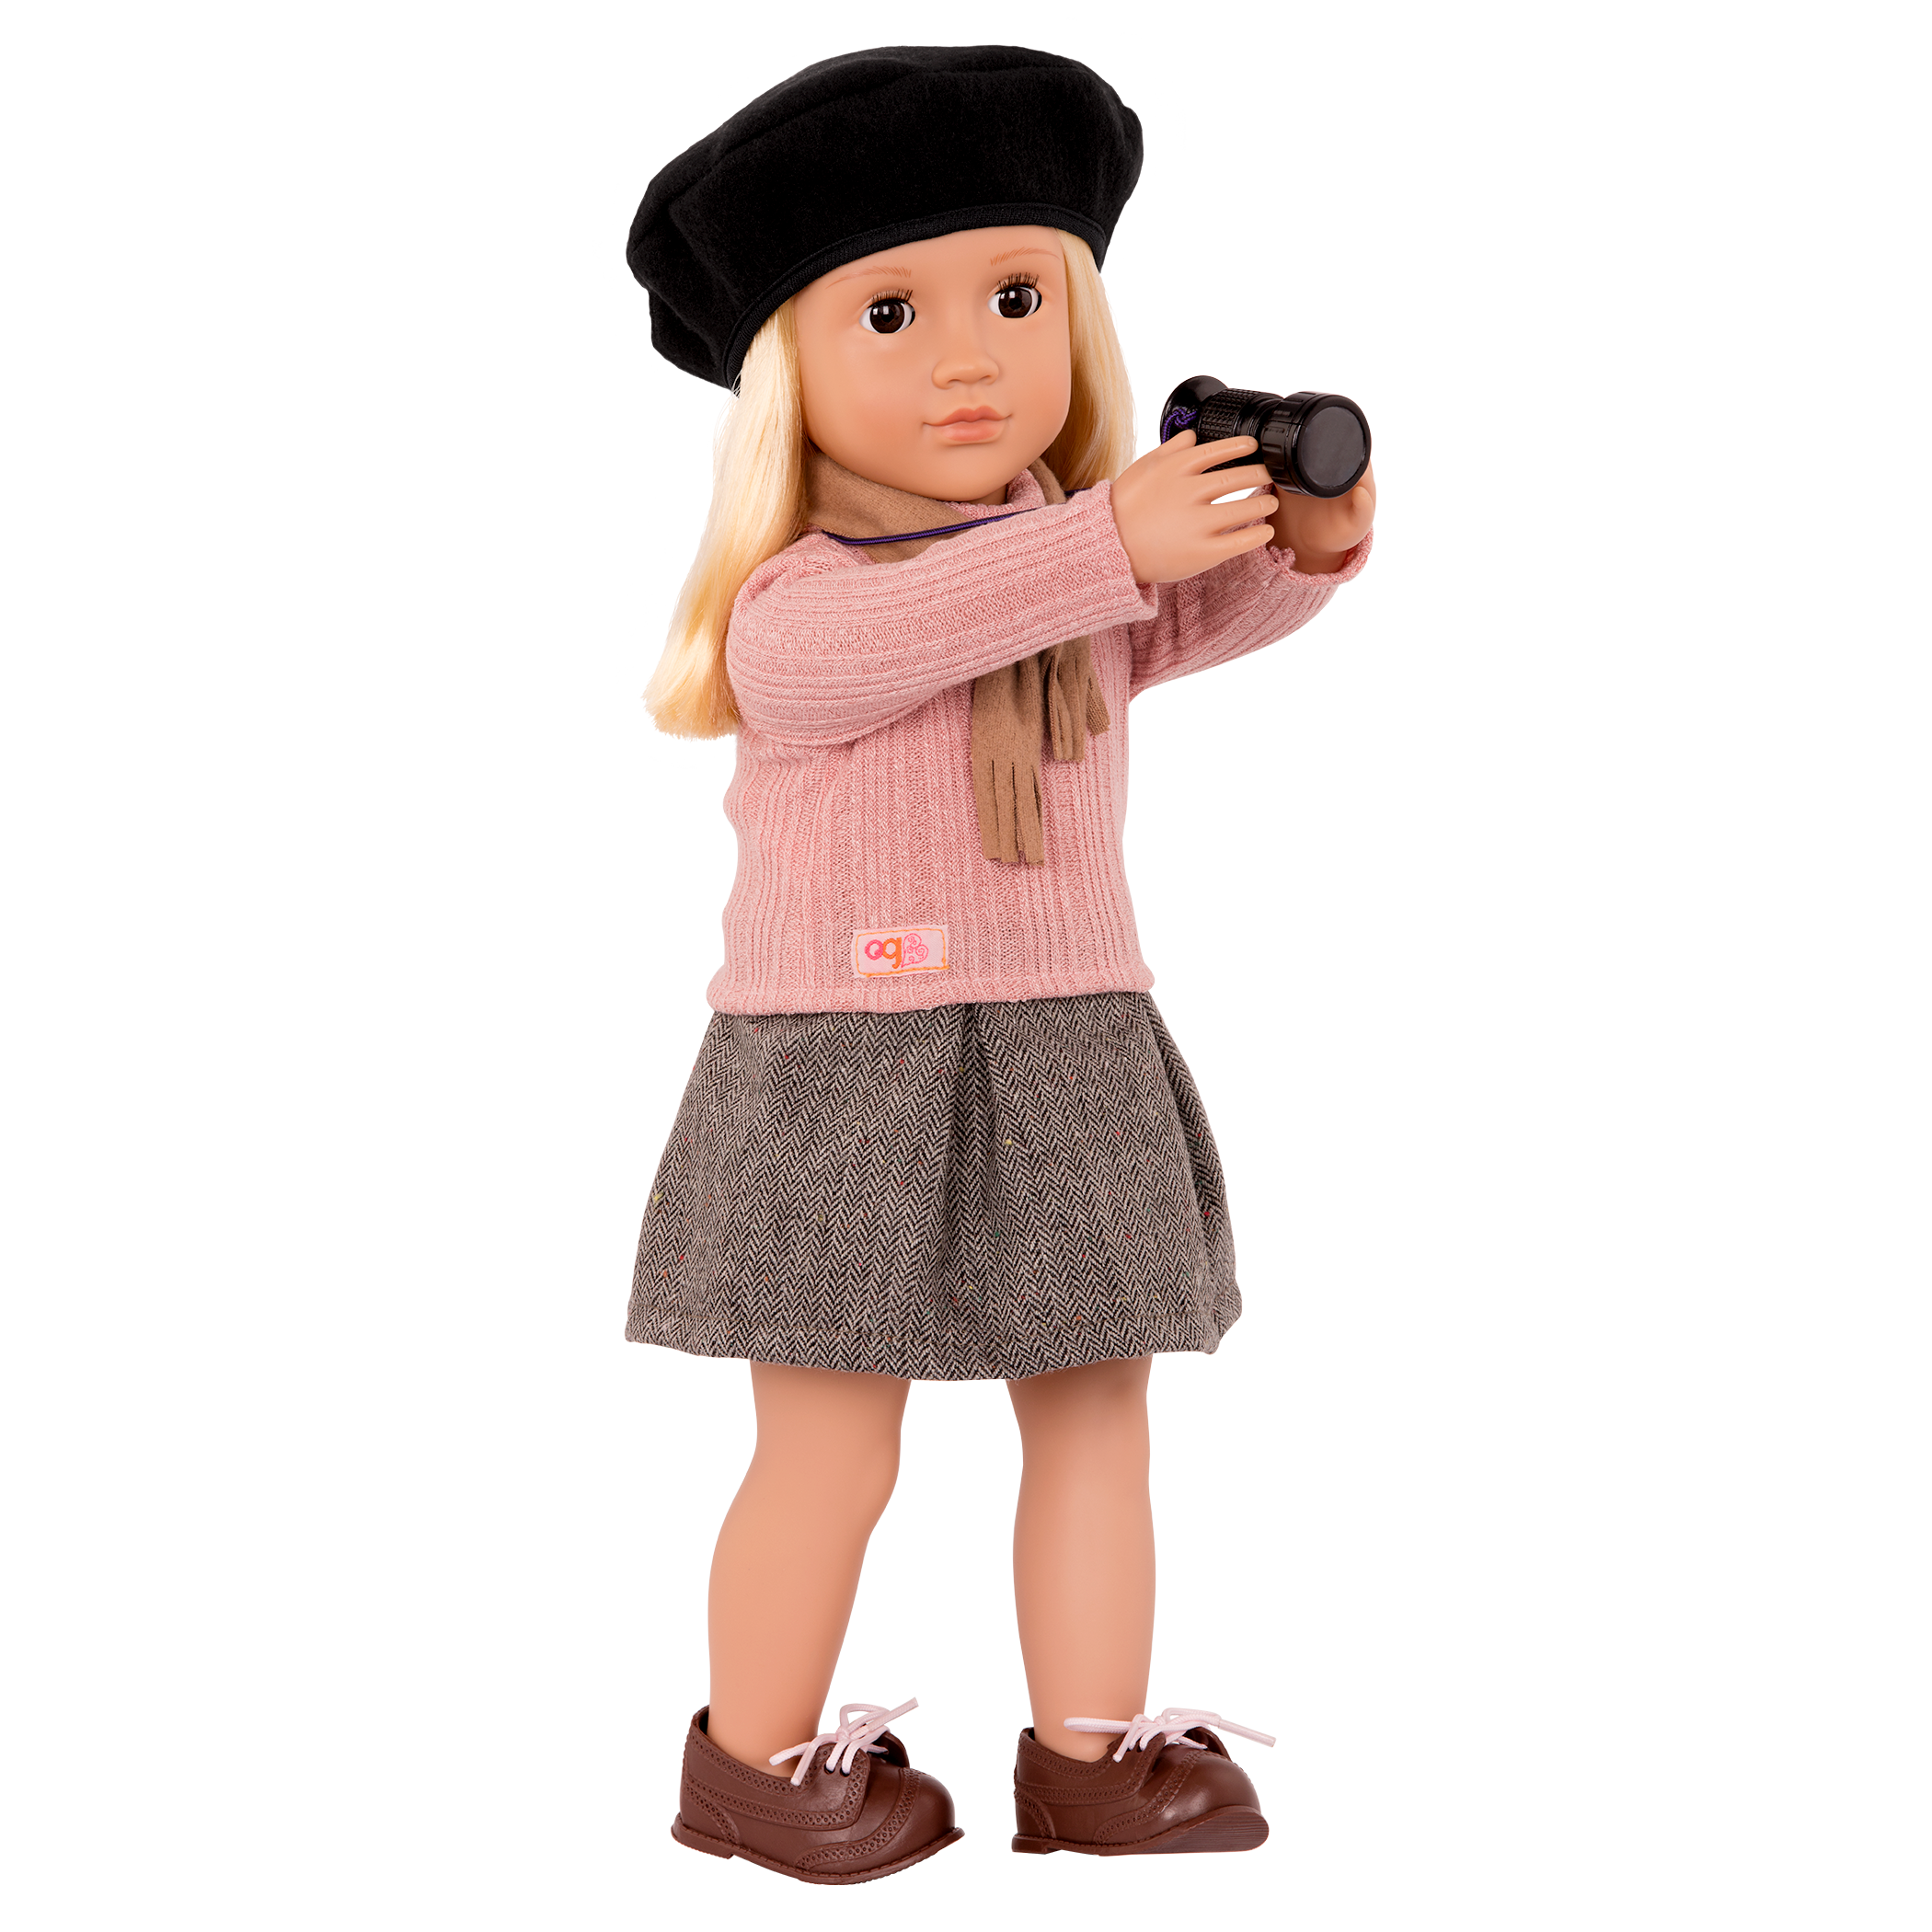 Kathleen Regular 18-inch Director Doll with viewfinder